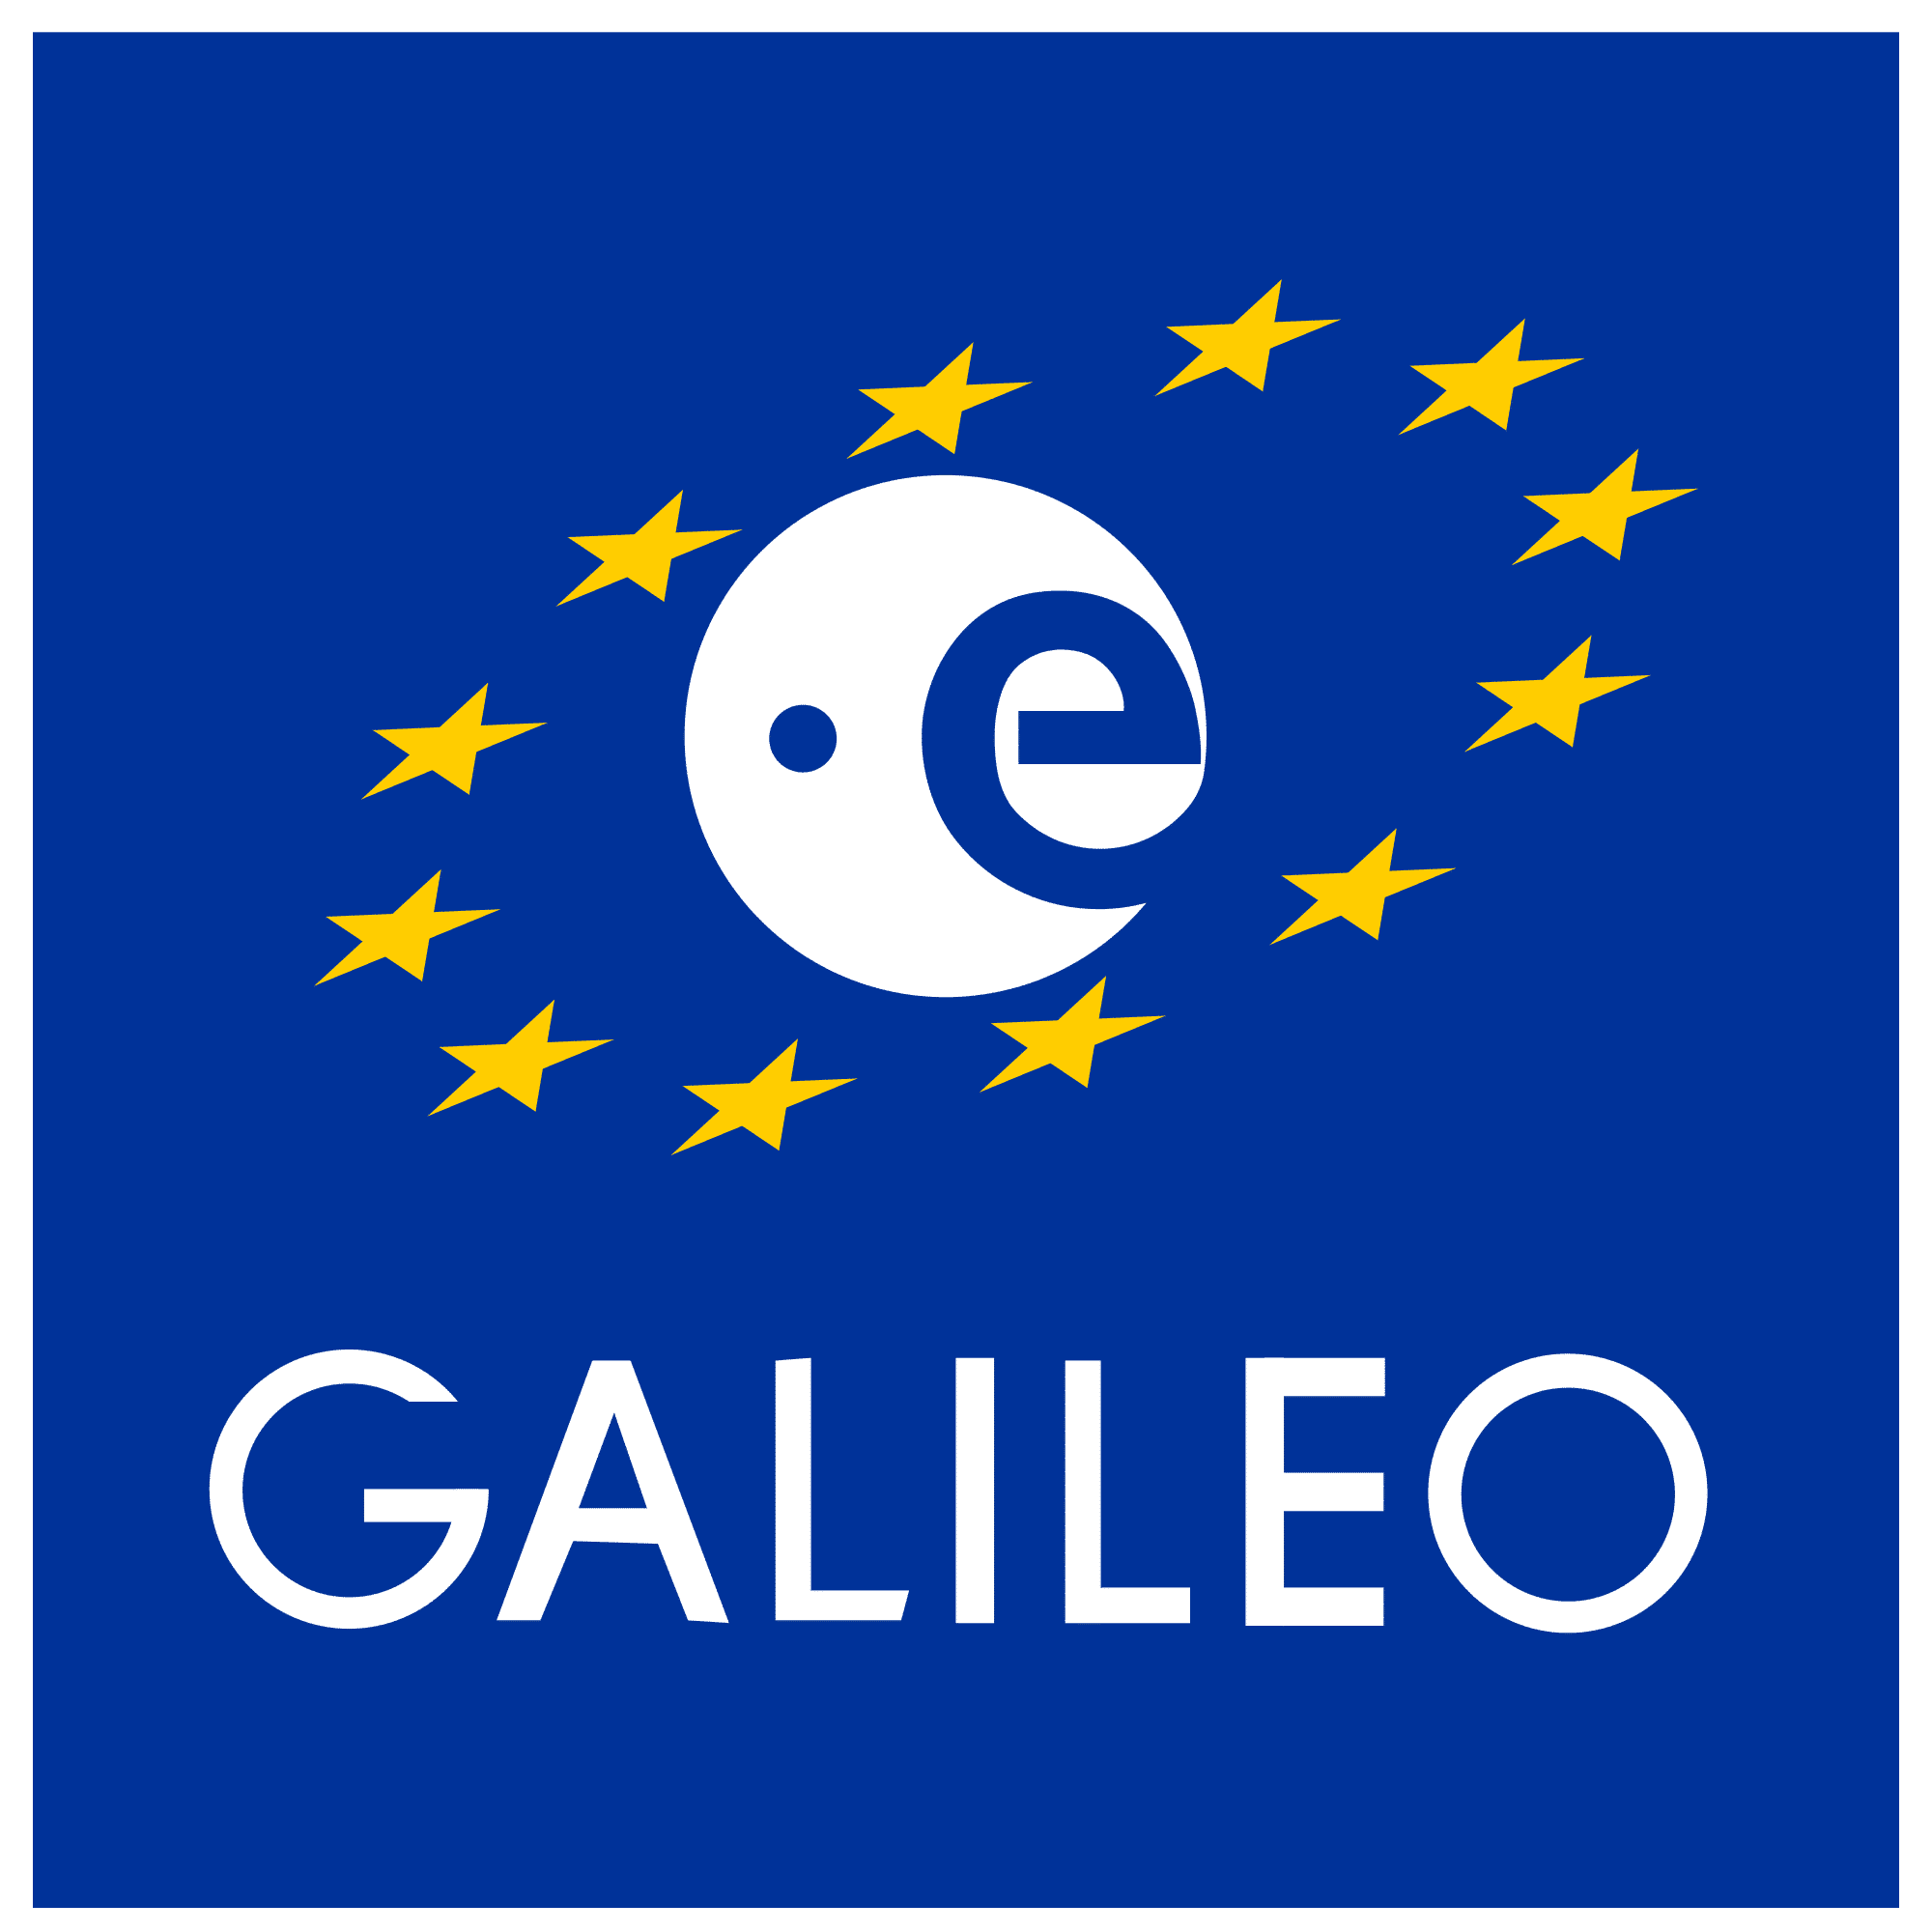 Europa da luz verde al proyecto Galileo